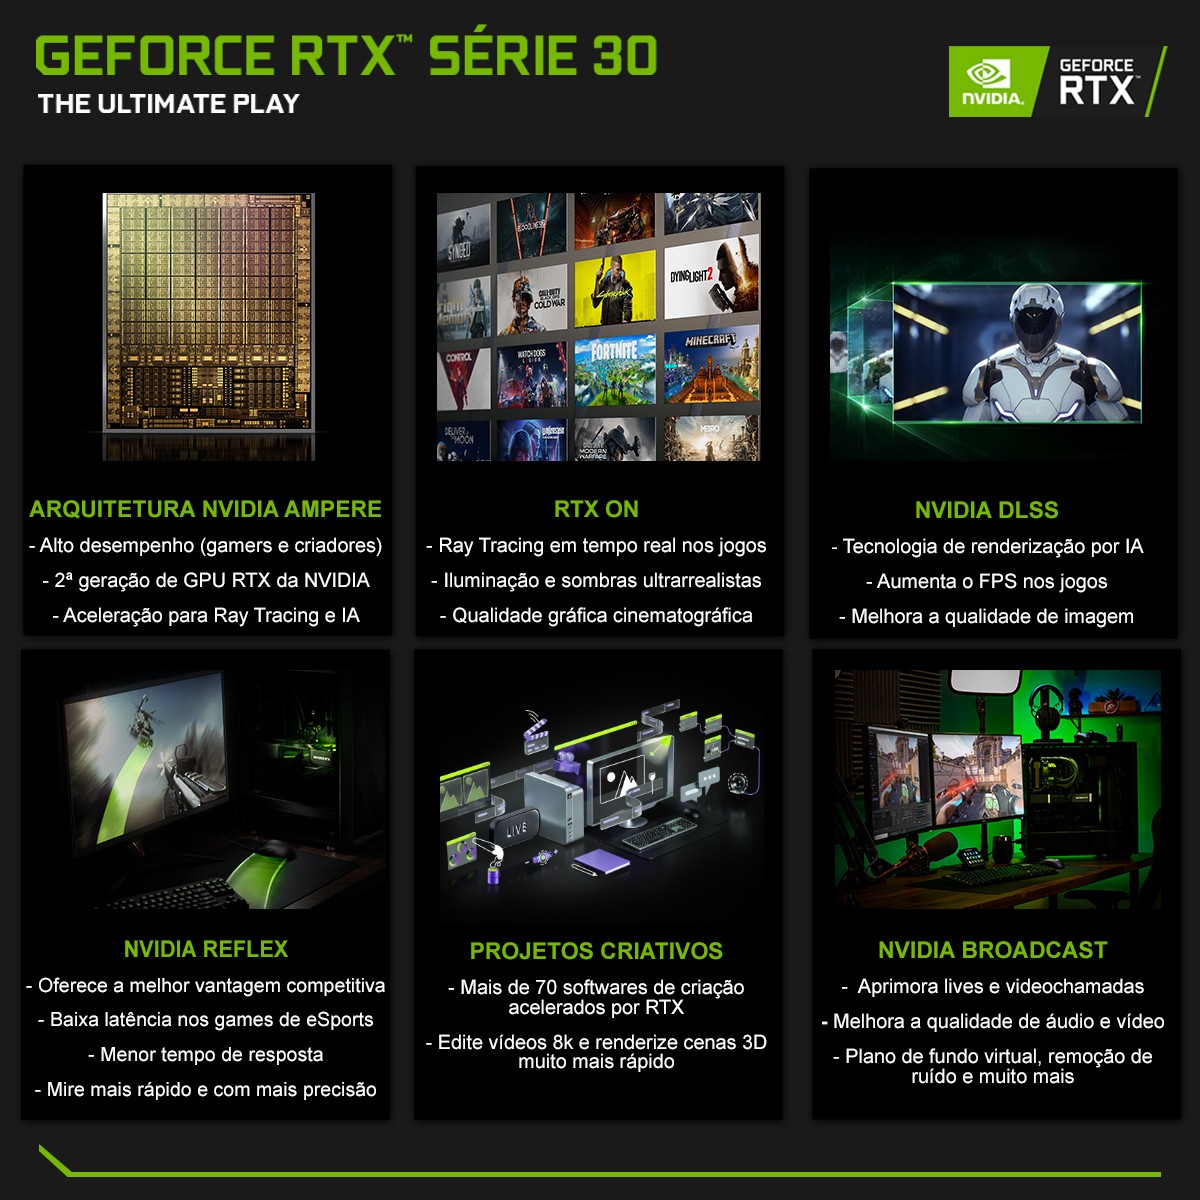 Placa de Vídeo Gainward, GeForce RTX 3090 Phoenix, 24GB, GDDR6, 384Bit, NED3090019SB-132BX